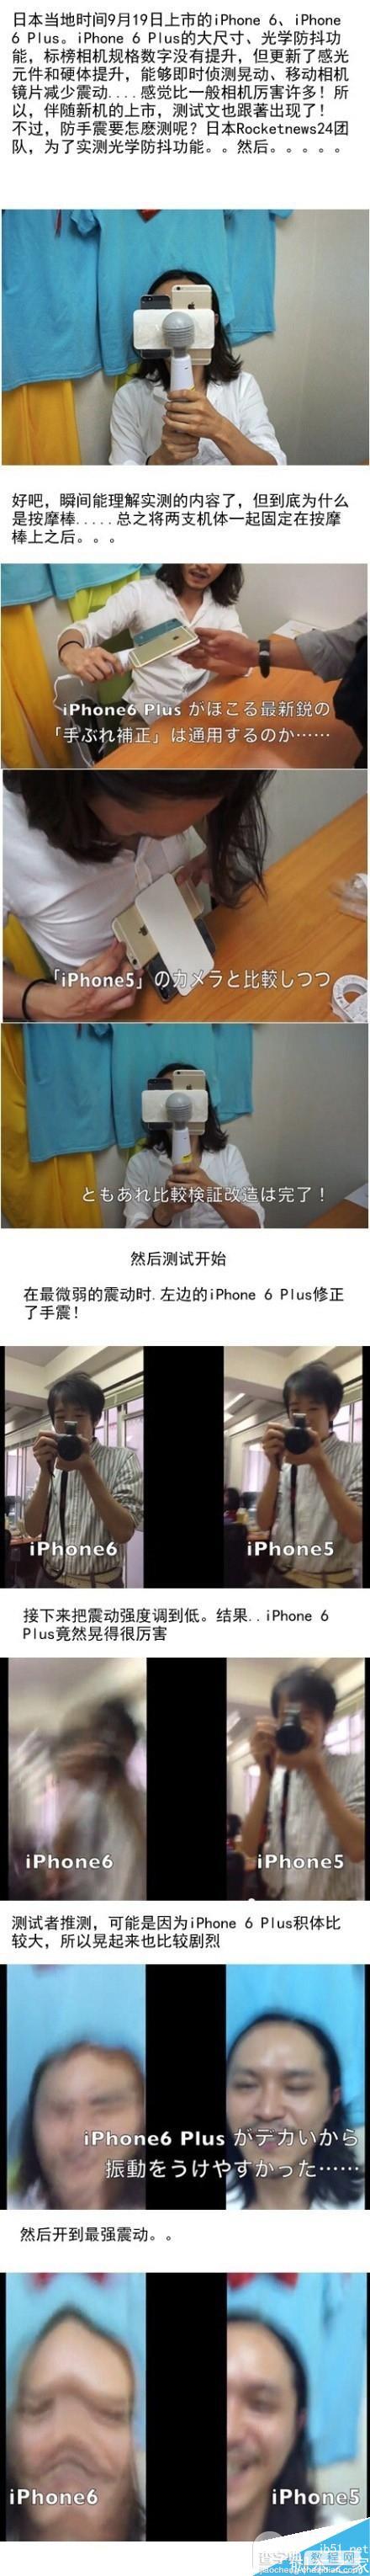 iPhone6/iPhone6 Plus防抖性能怎么样？iPhone6/6 Plus拍照性能测试1